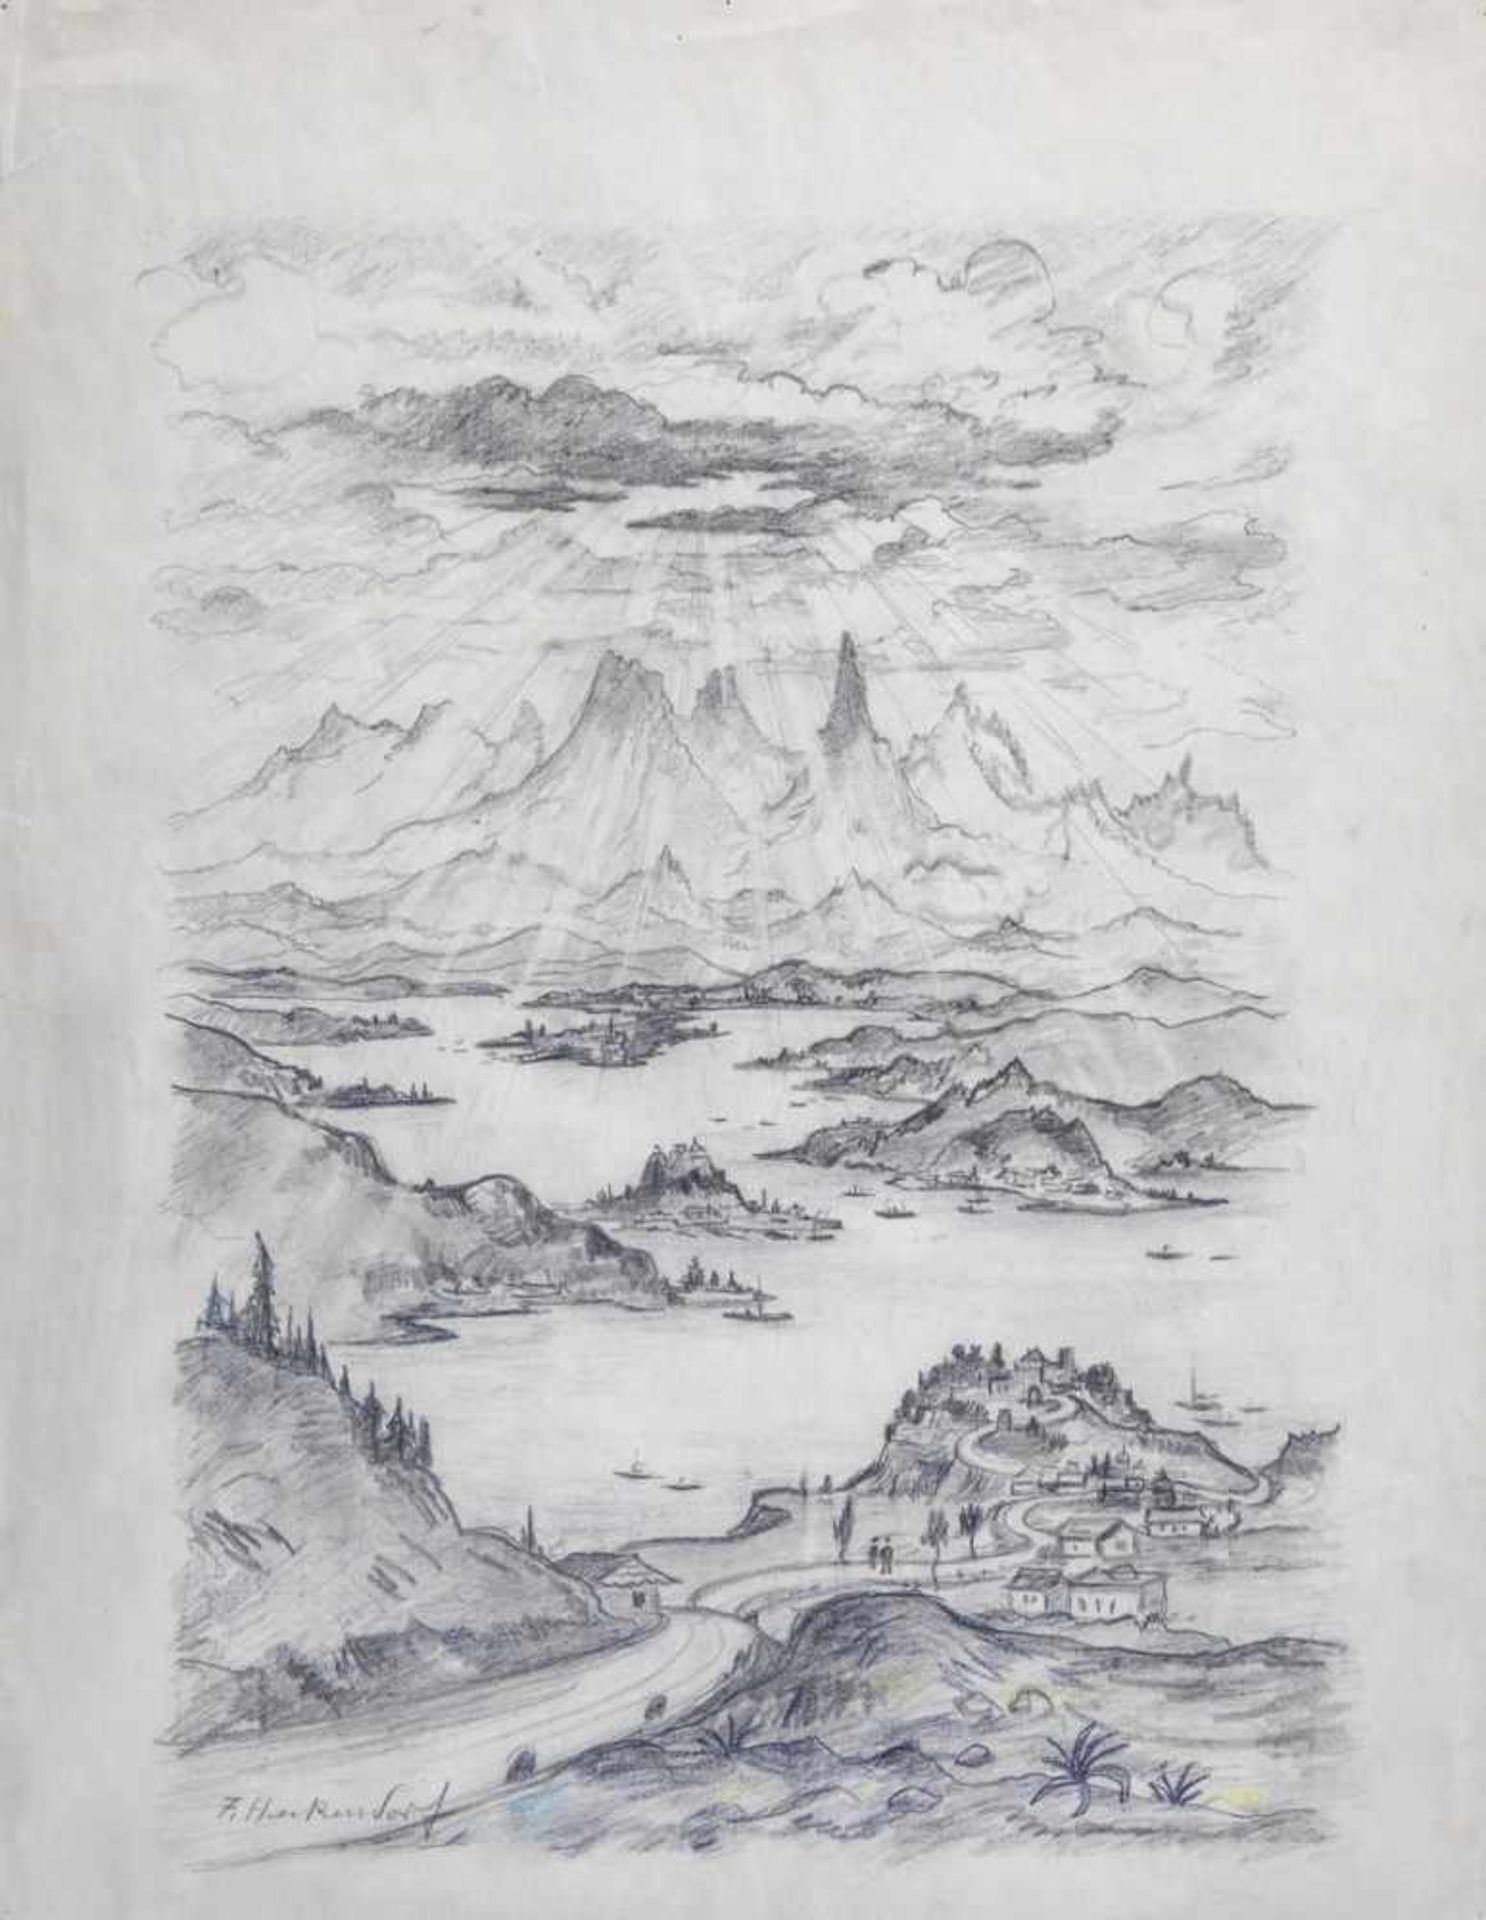 Franz Heckendorf. 1888 Berlin - 1962 Munich. Seascape with a mountain panorama. Pencil onpaper.